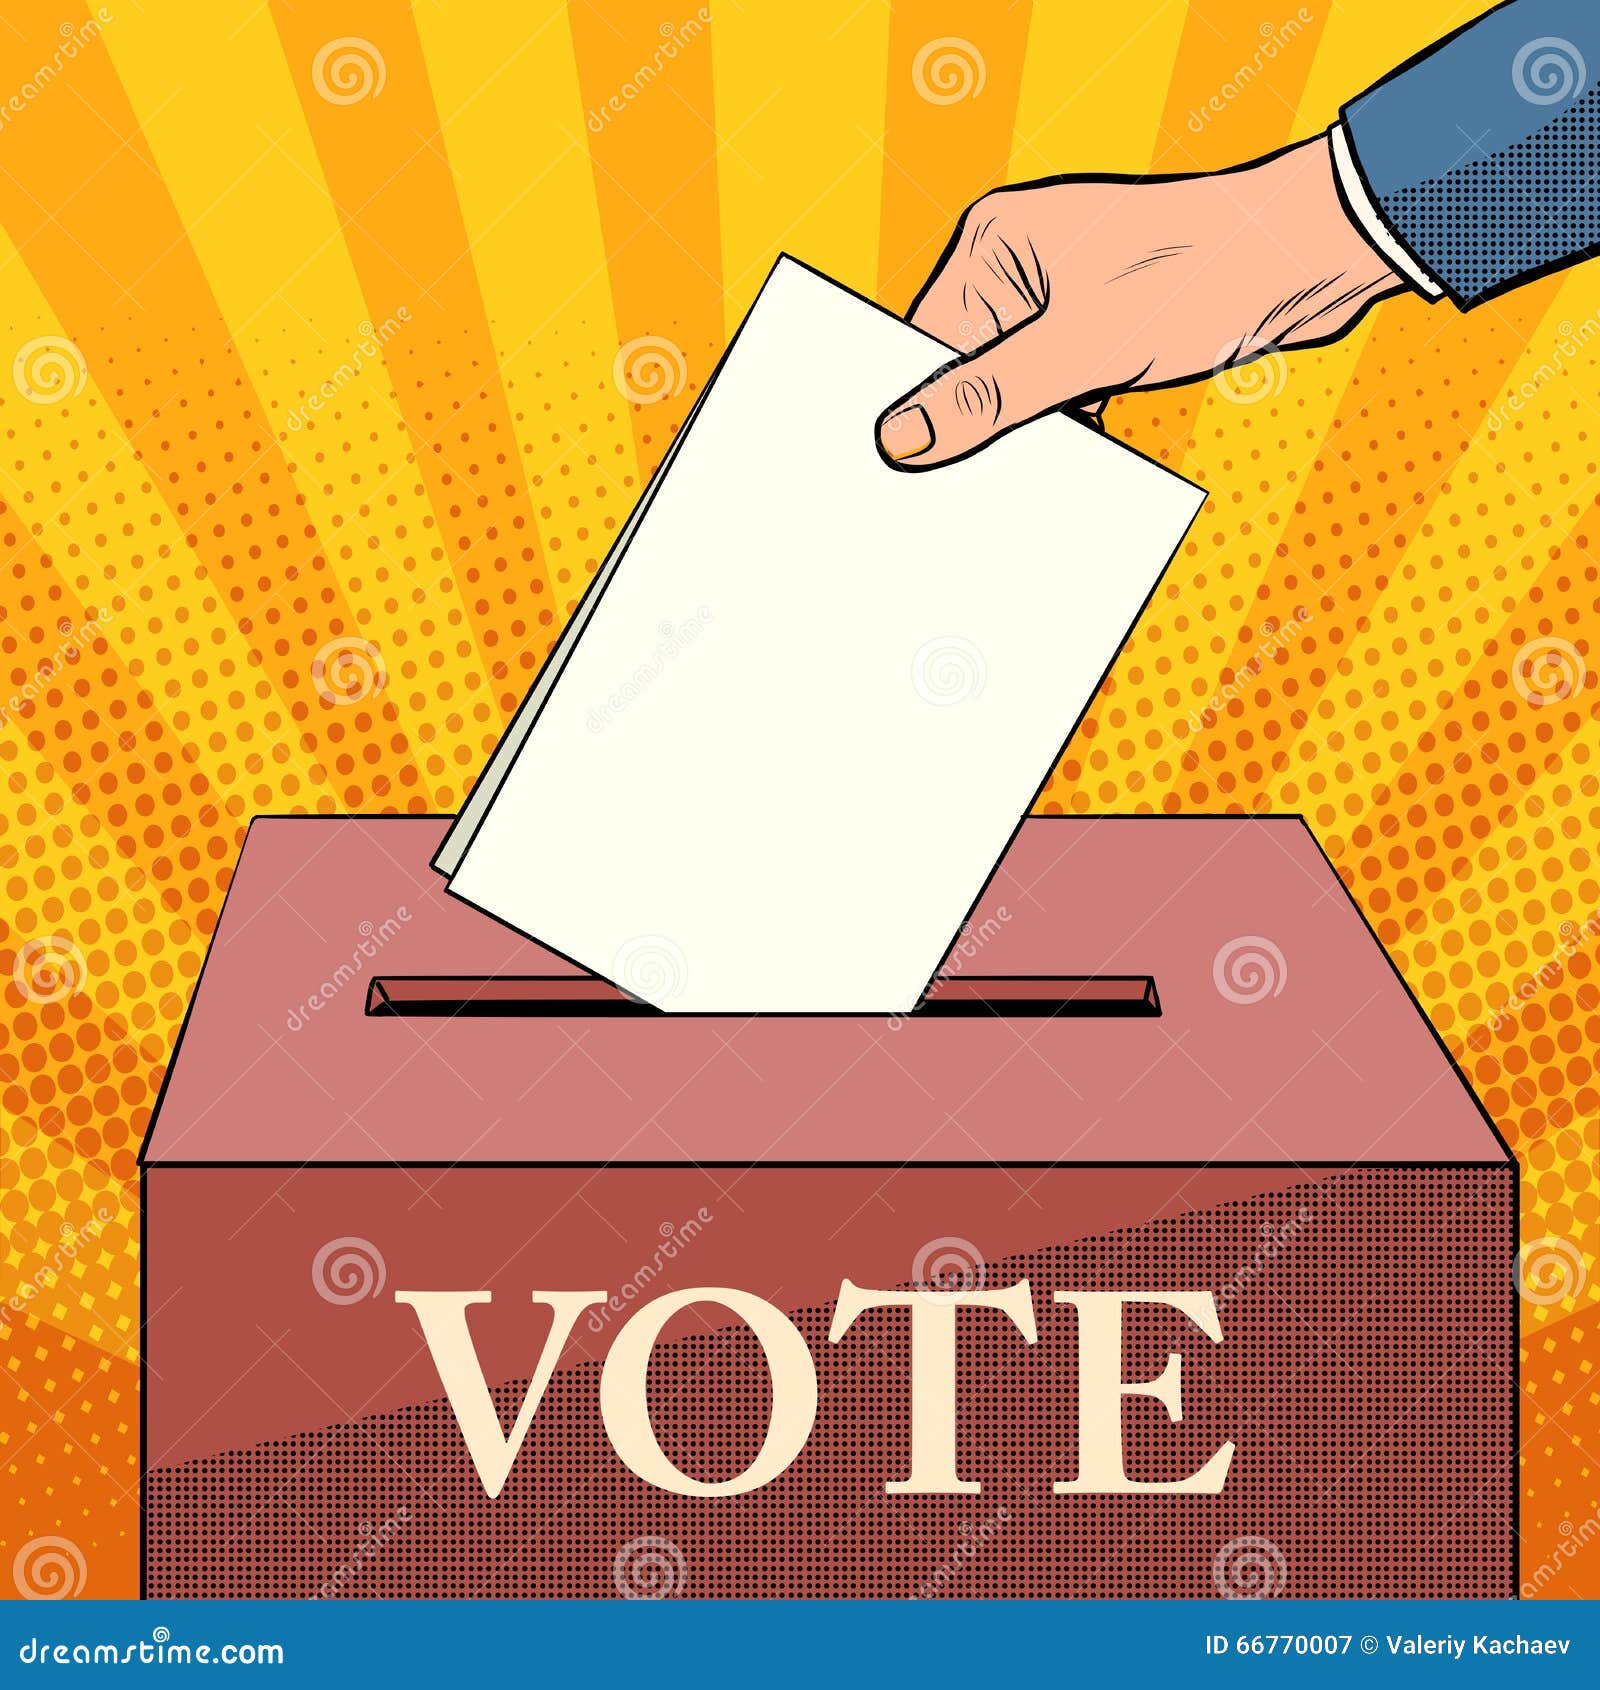 voter ballot box politics elections